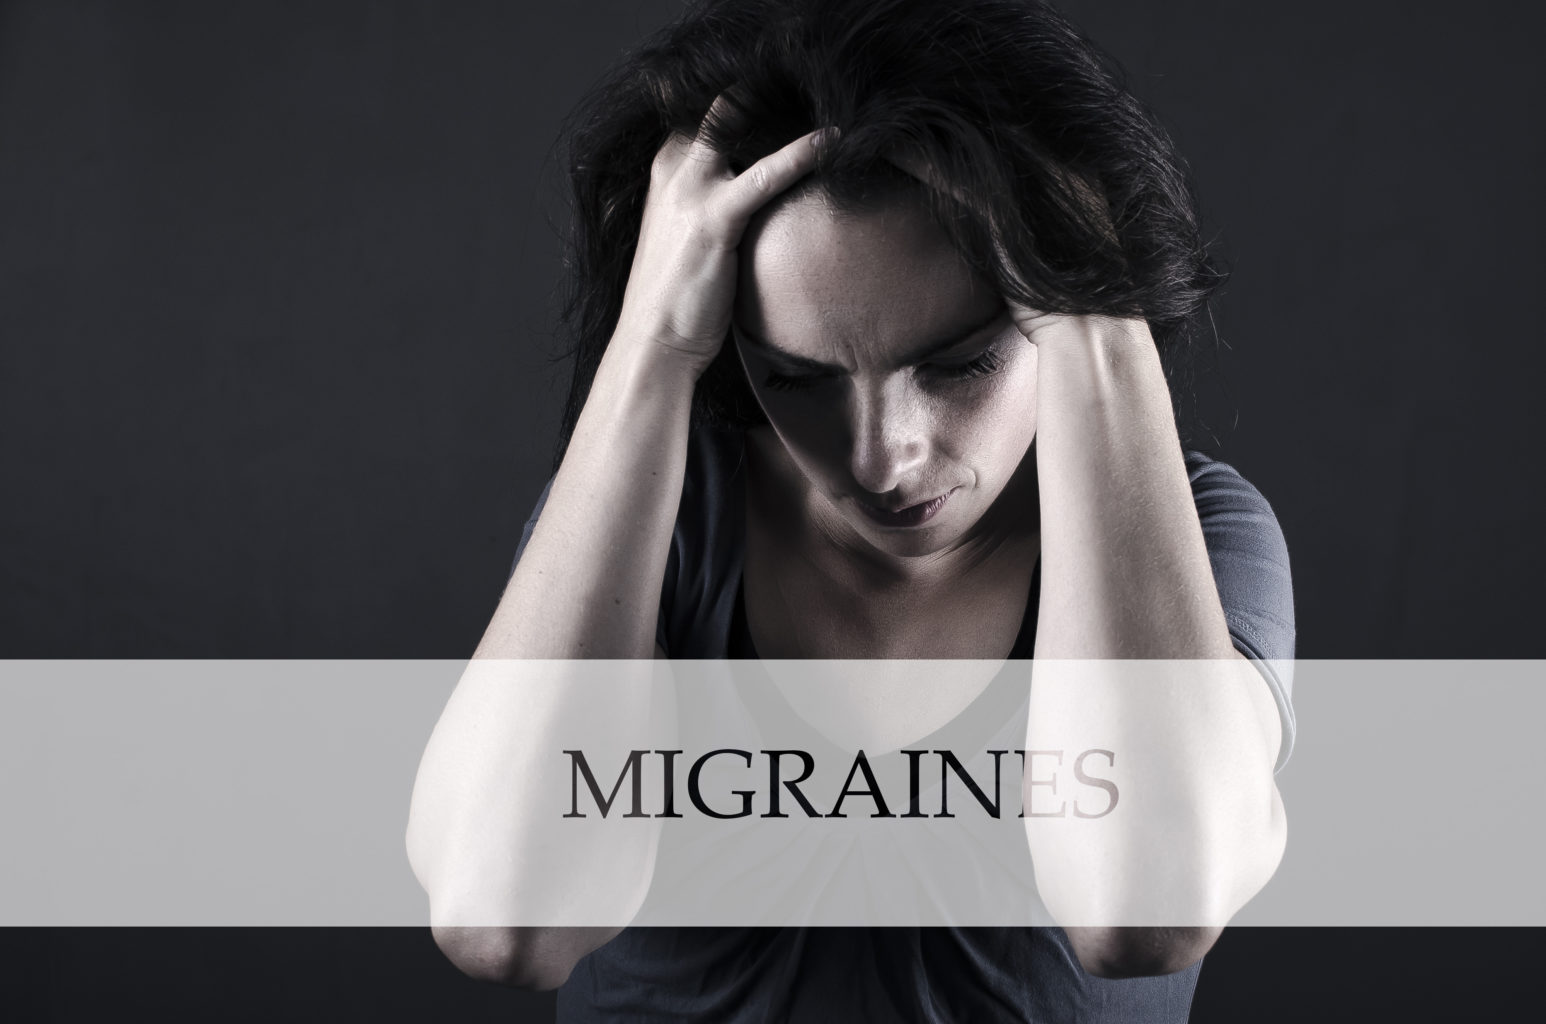 what causes migraine headaches?